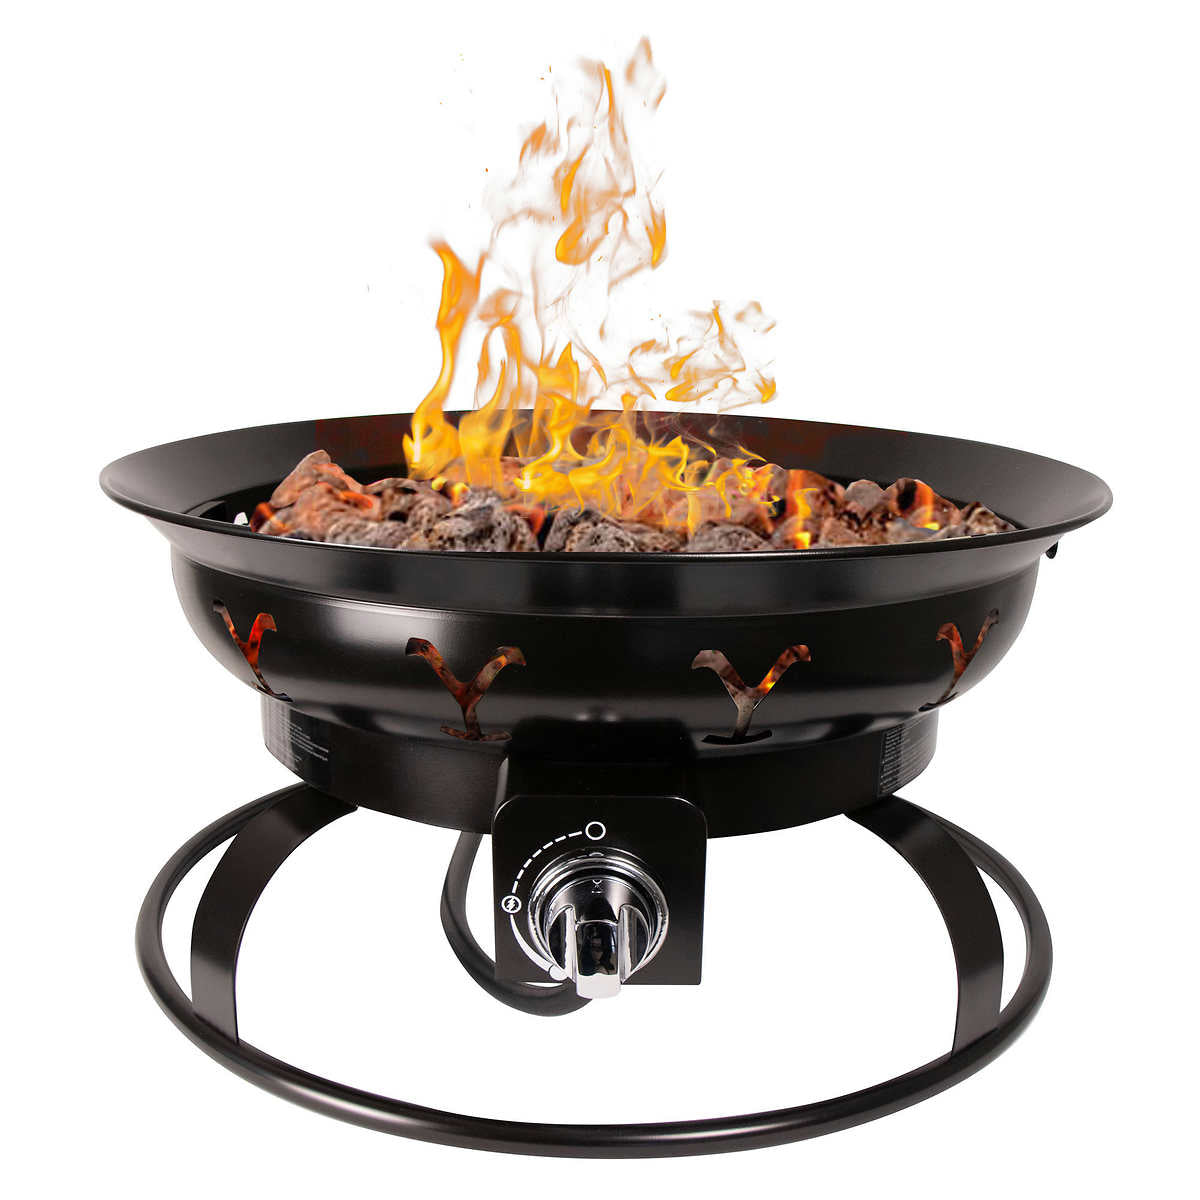 NEW - Costco - Yellowstone Gas Fire Bowl - Retail $139